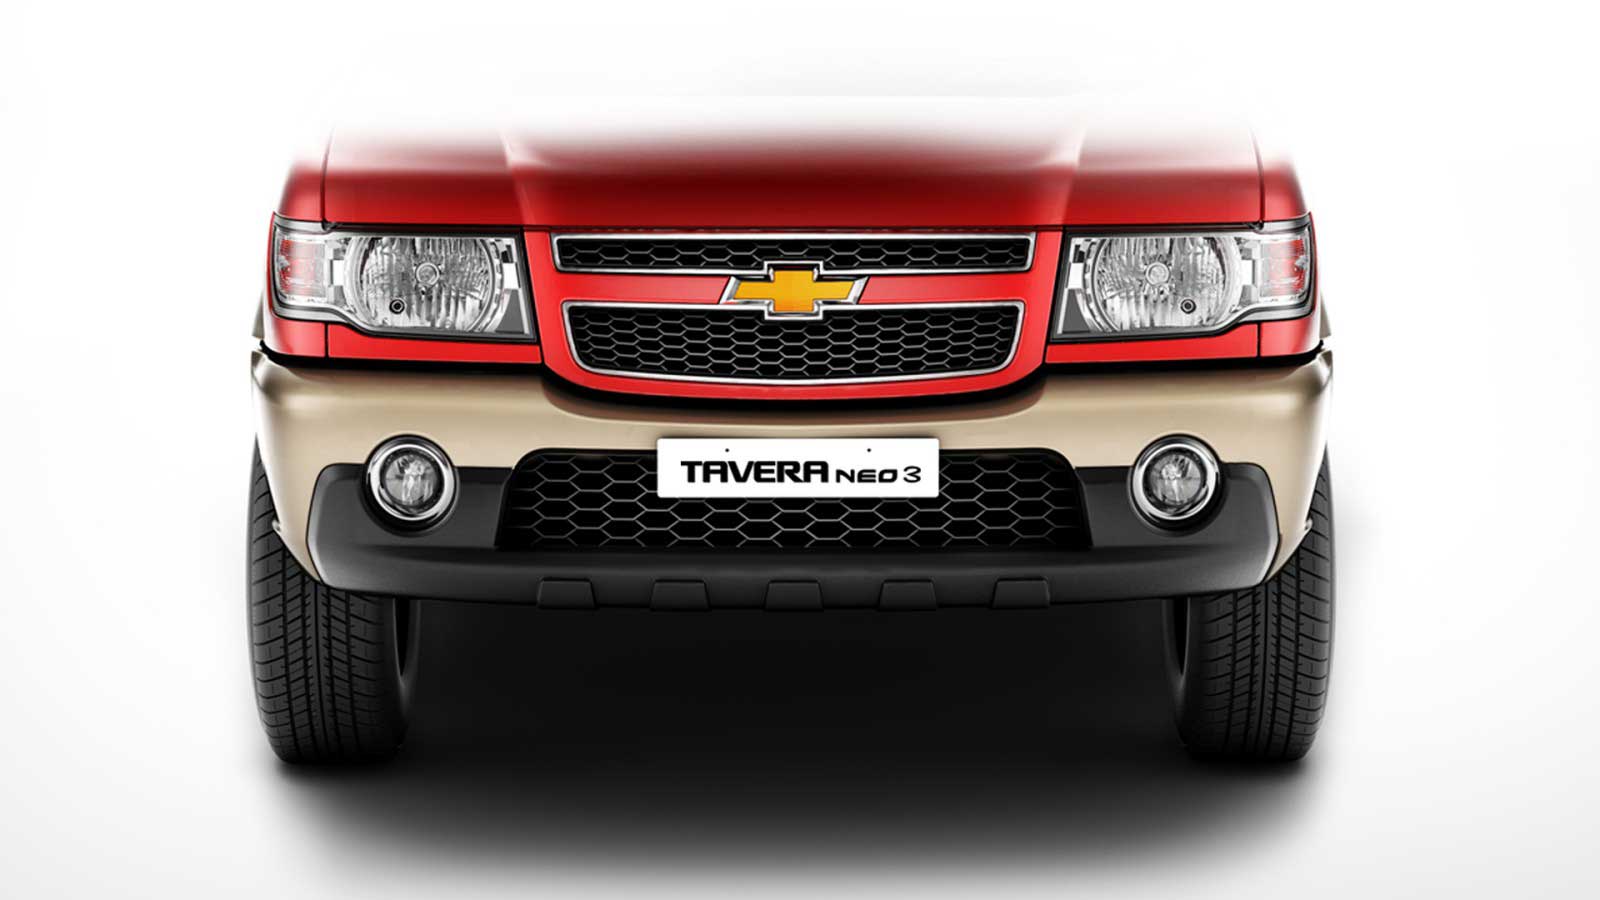 Chevrolet Tavera Neo 3-10 STR BSIII Exterior front view